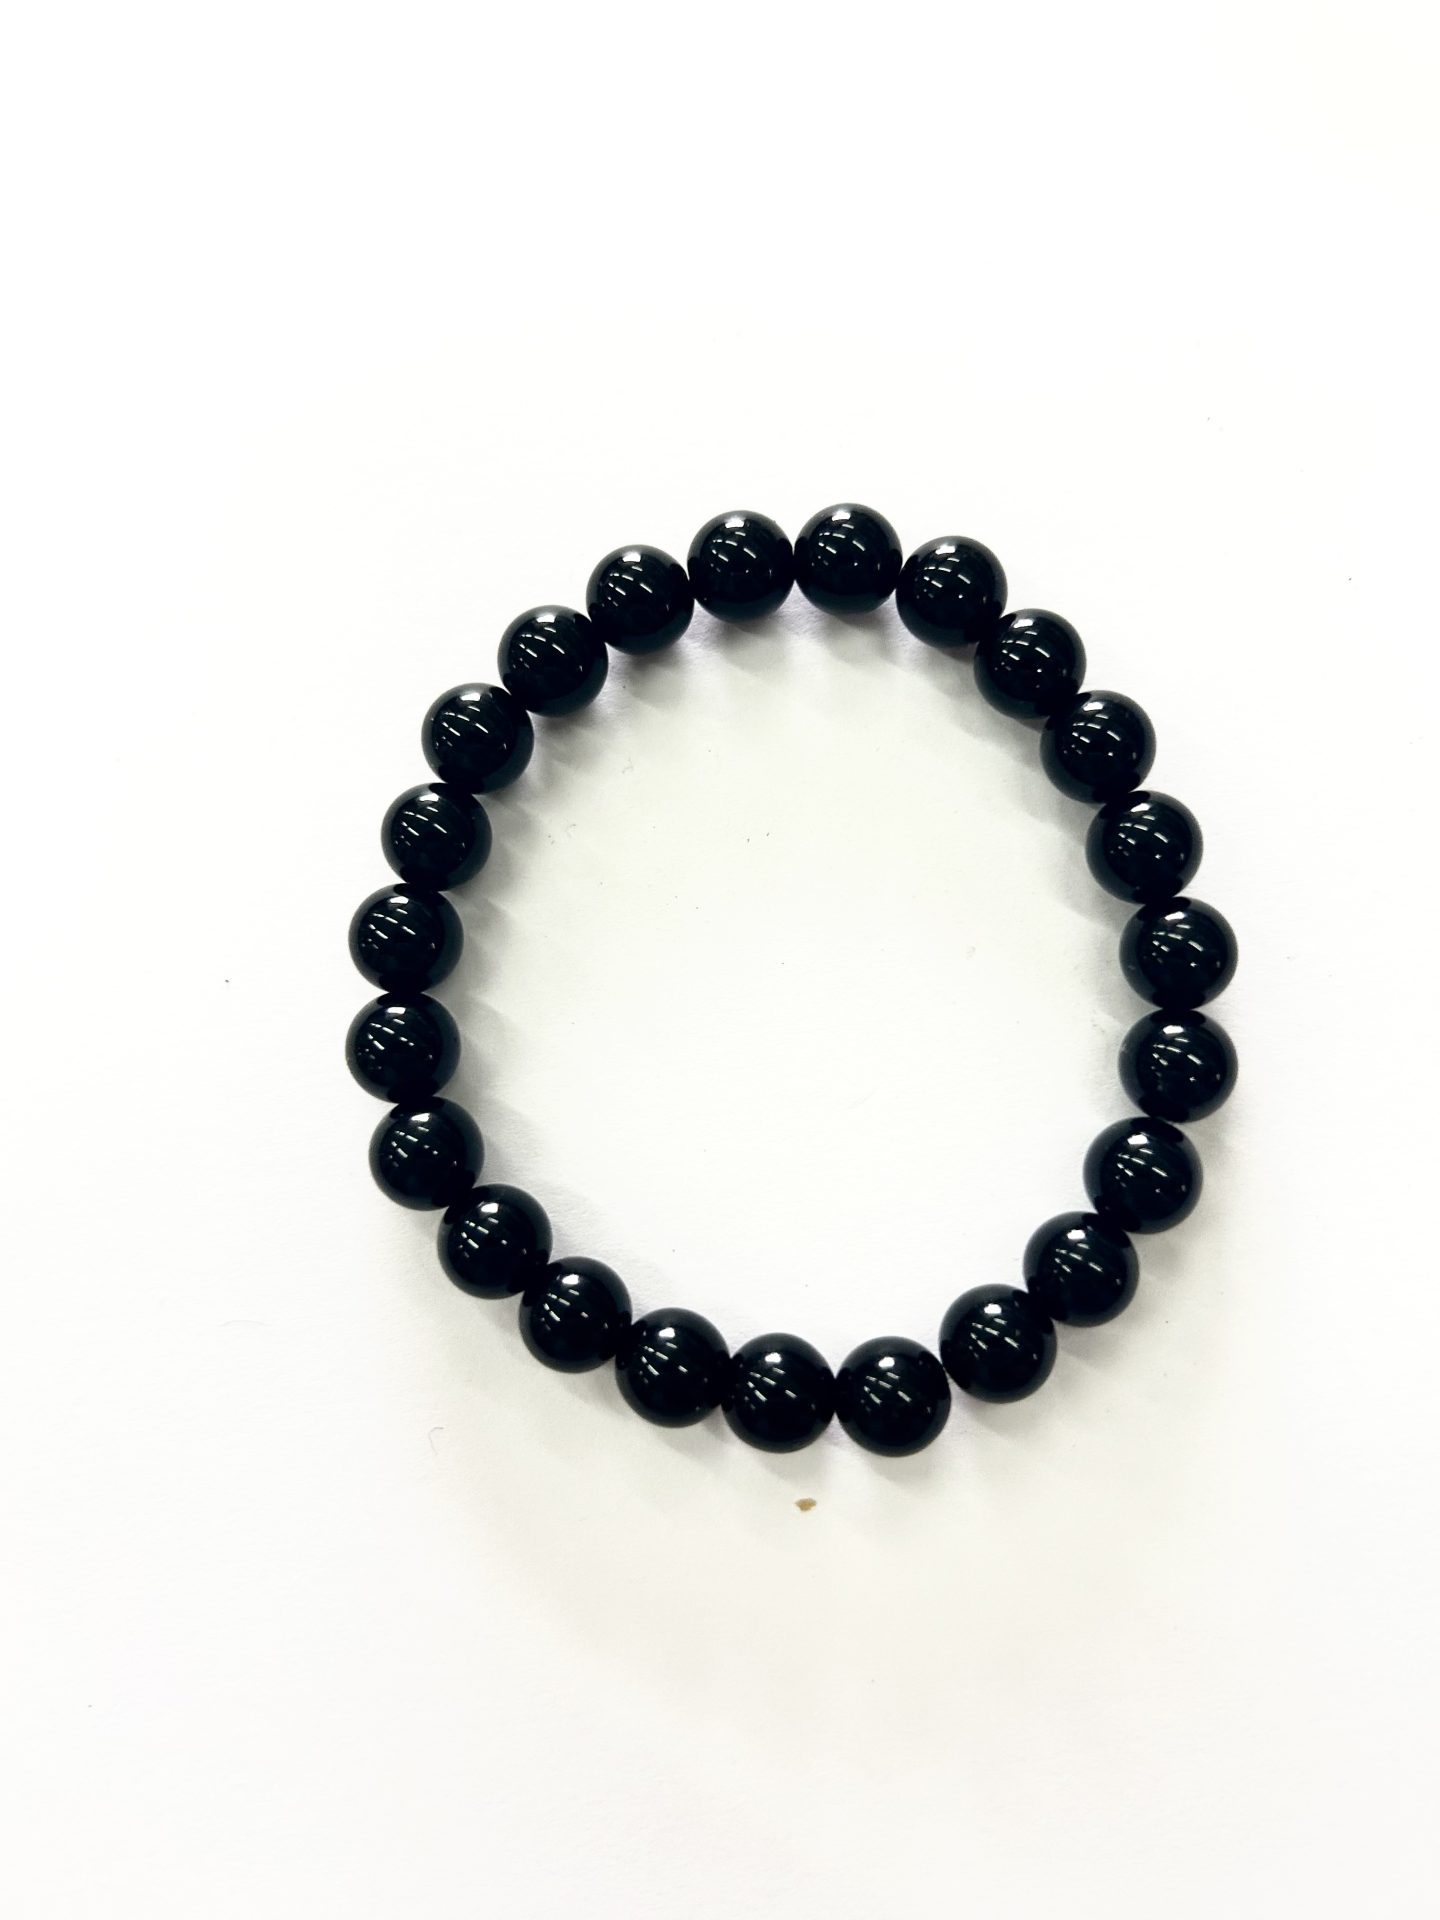 8mm black obsidian bracelet